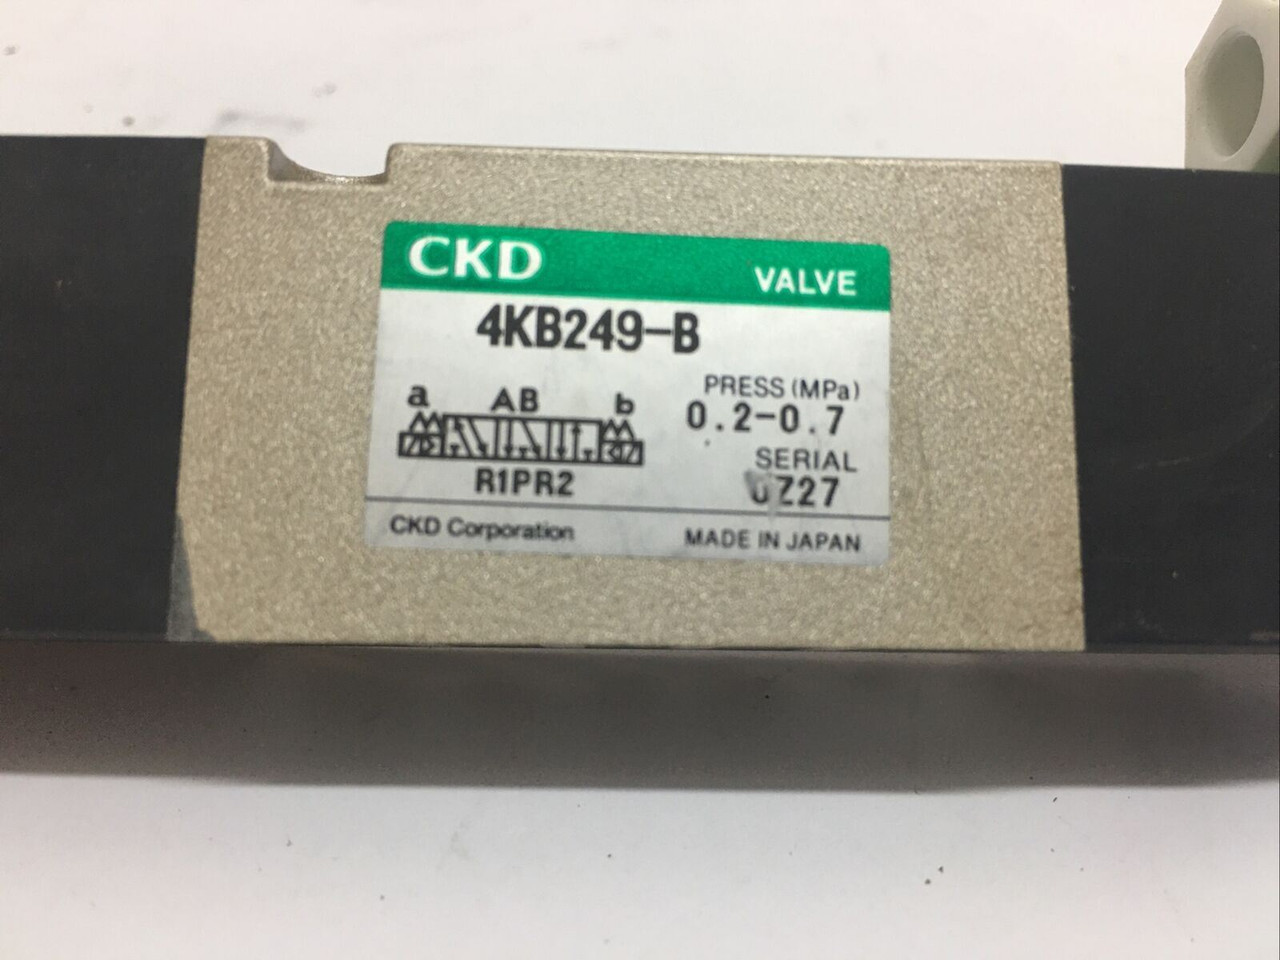 Solenoid Valve 4KB249-B CKD 24 VDC, Pressure (MPA) 0.2-0.7, 3 Position